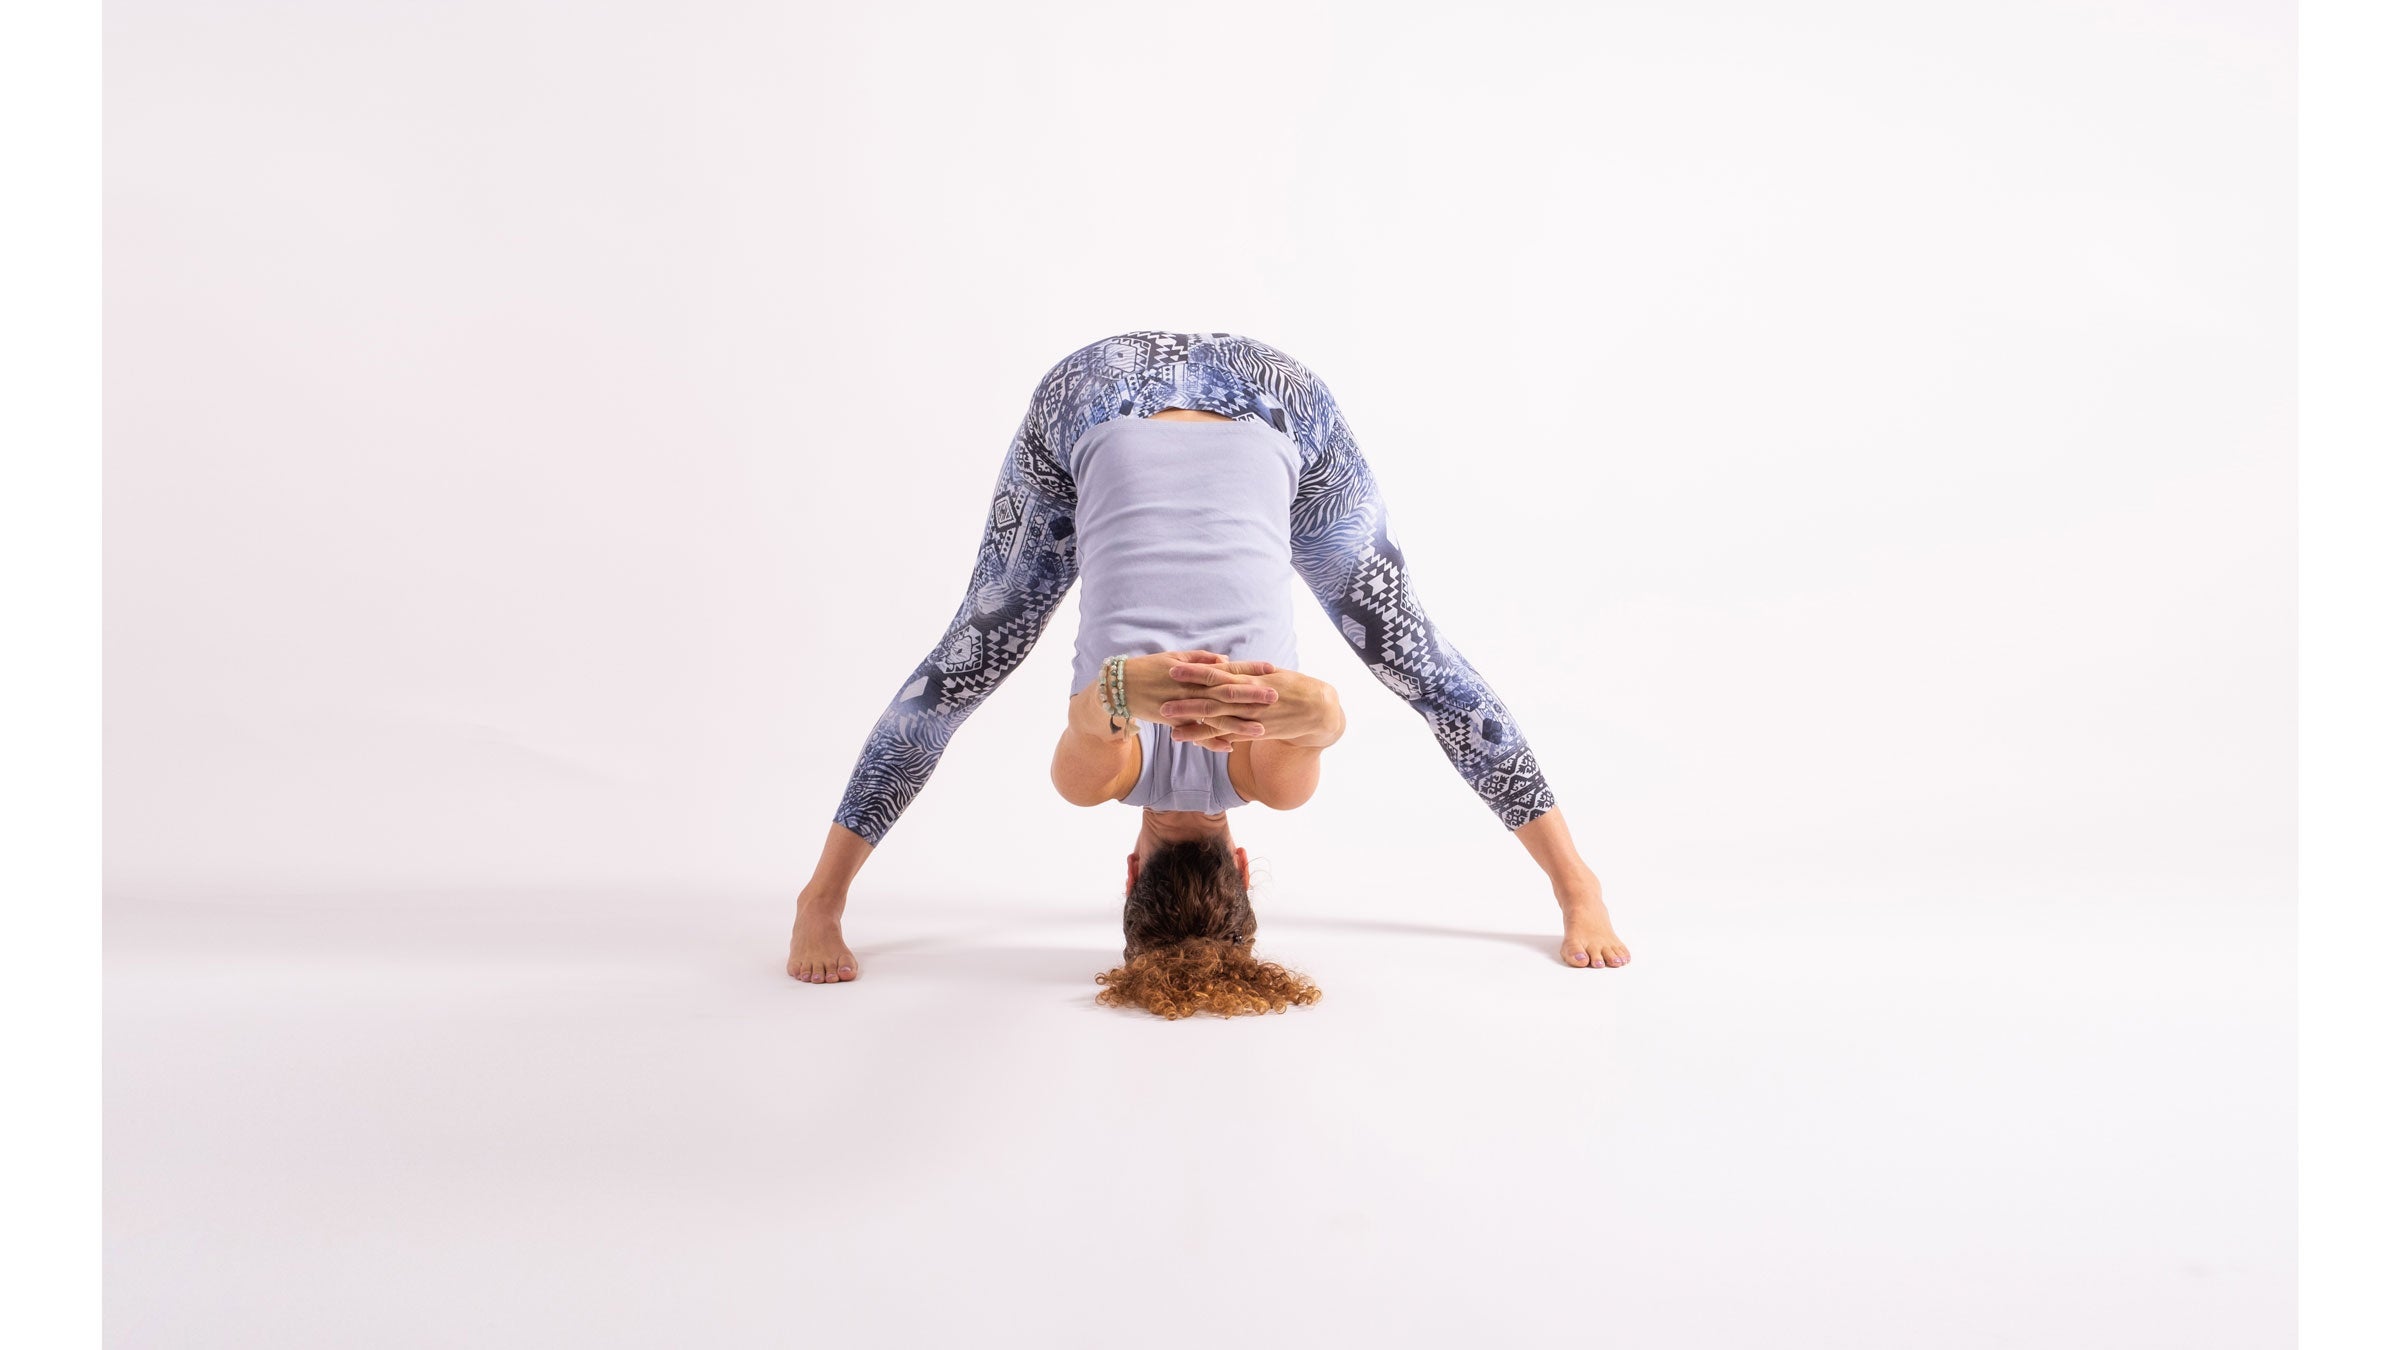 Yoga for balance vata | Yoga for balance, Bridge pose, Mountain pose